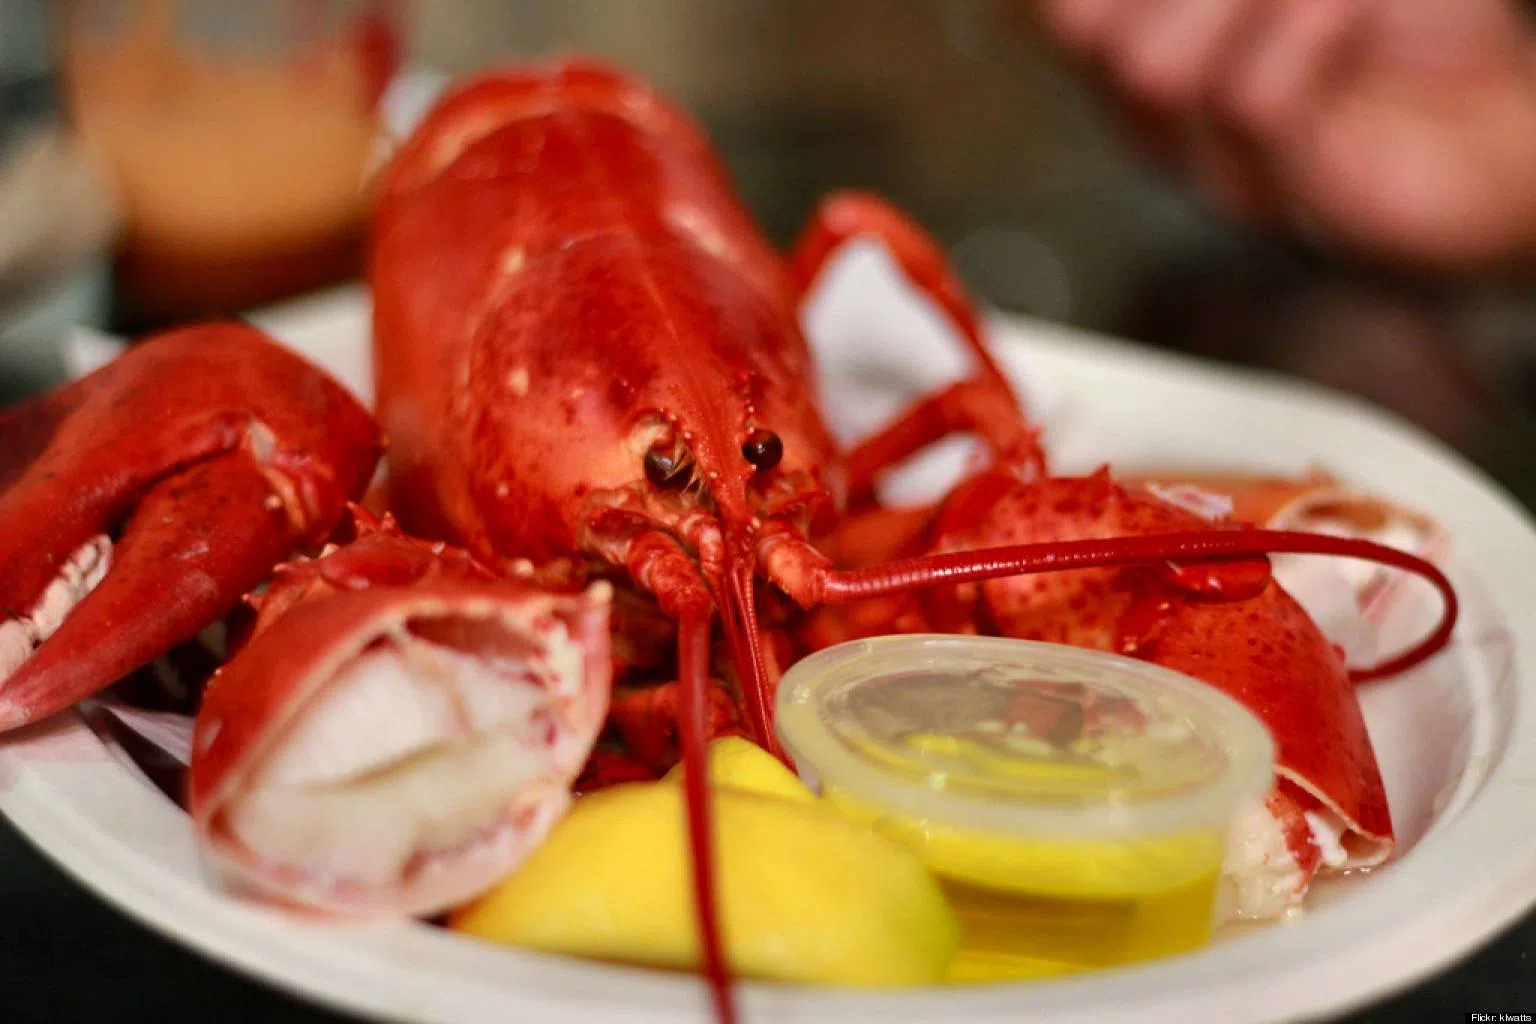 31st Annual Shelburne County Lobster Festival "Huge Success"